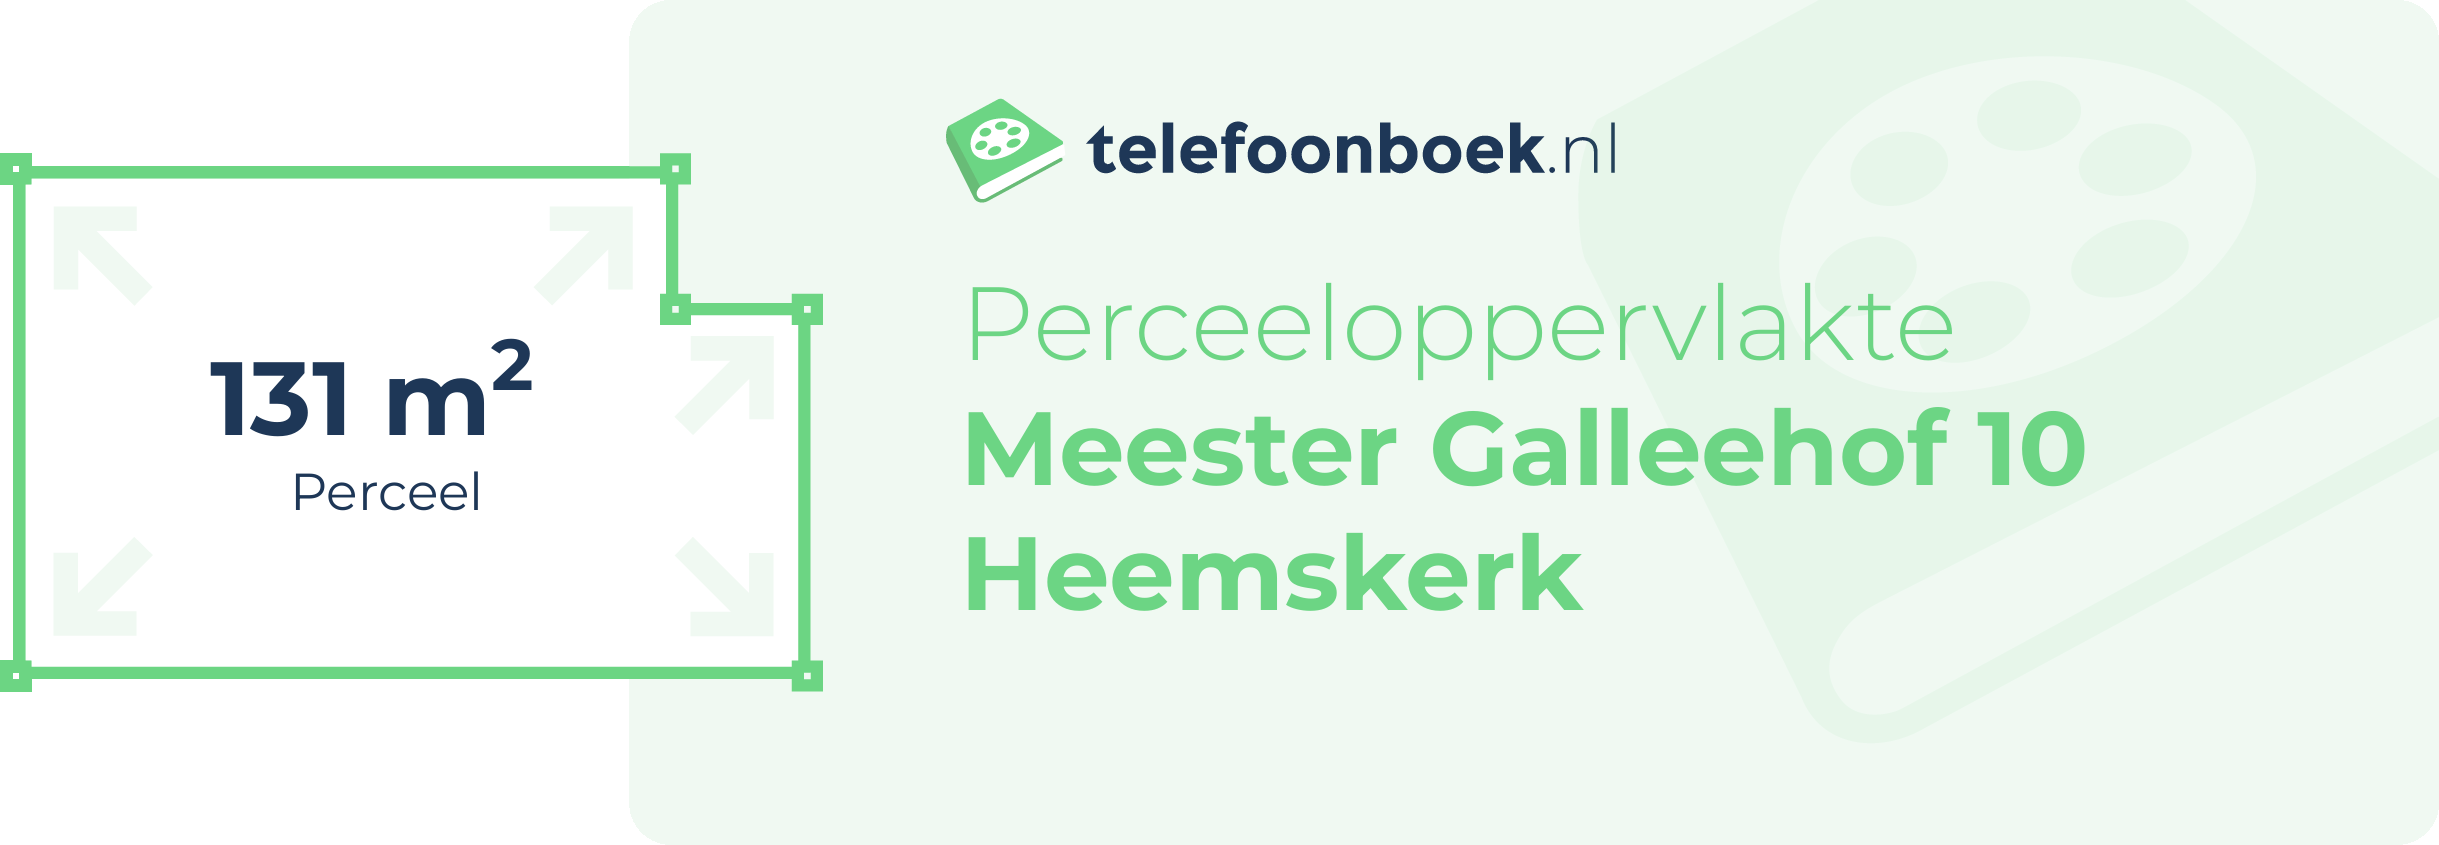 Perceeloppervlakte Meester Galleehof 10 Heemskerk